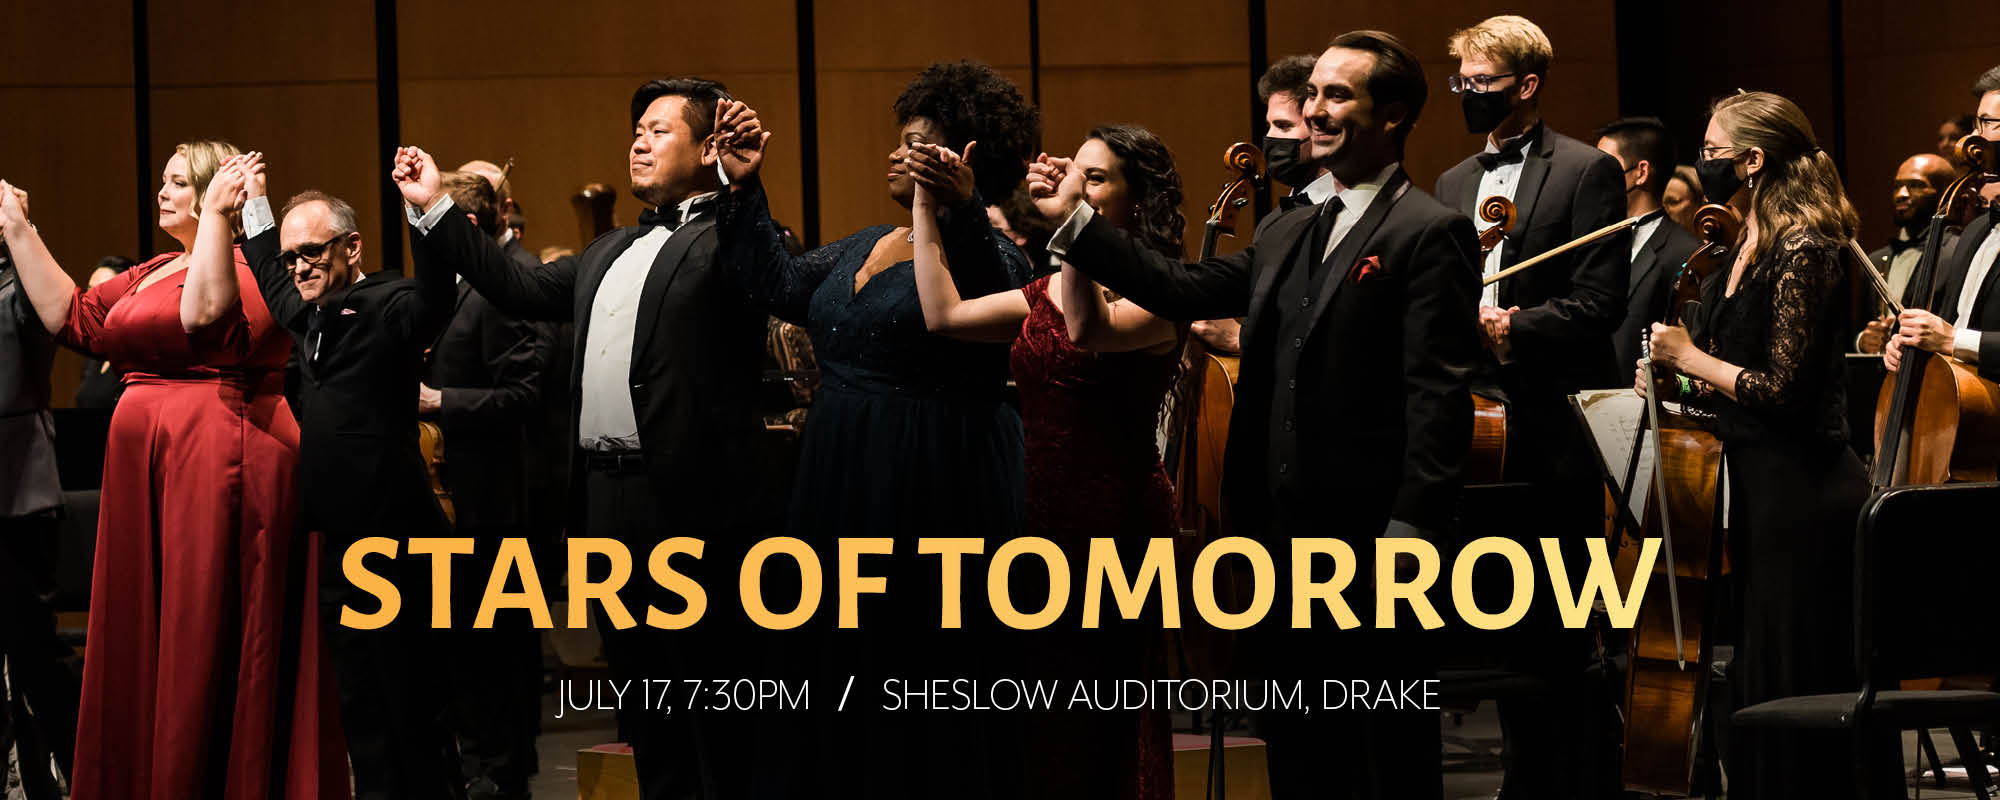 Stars of Tomorrow Event Des Moines Metro Opera